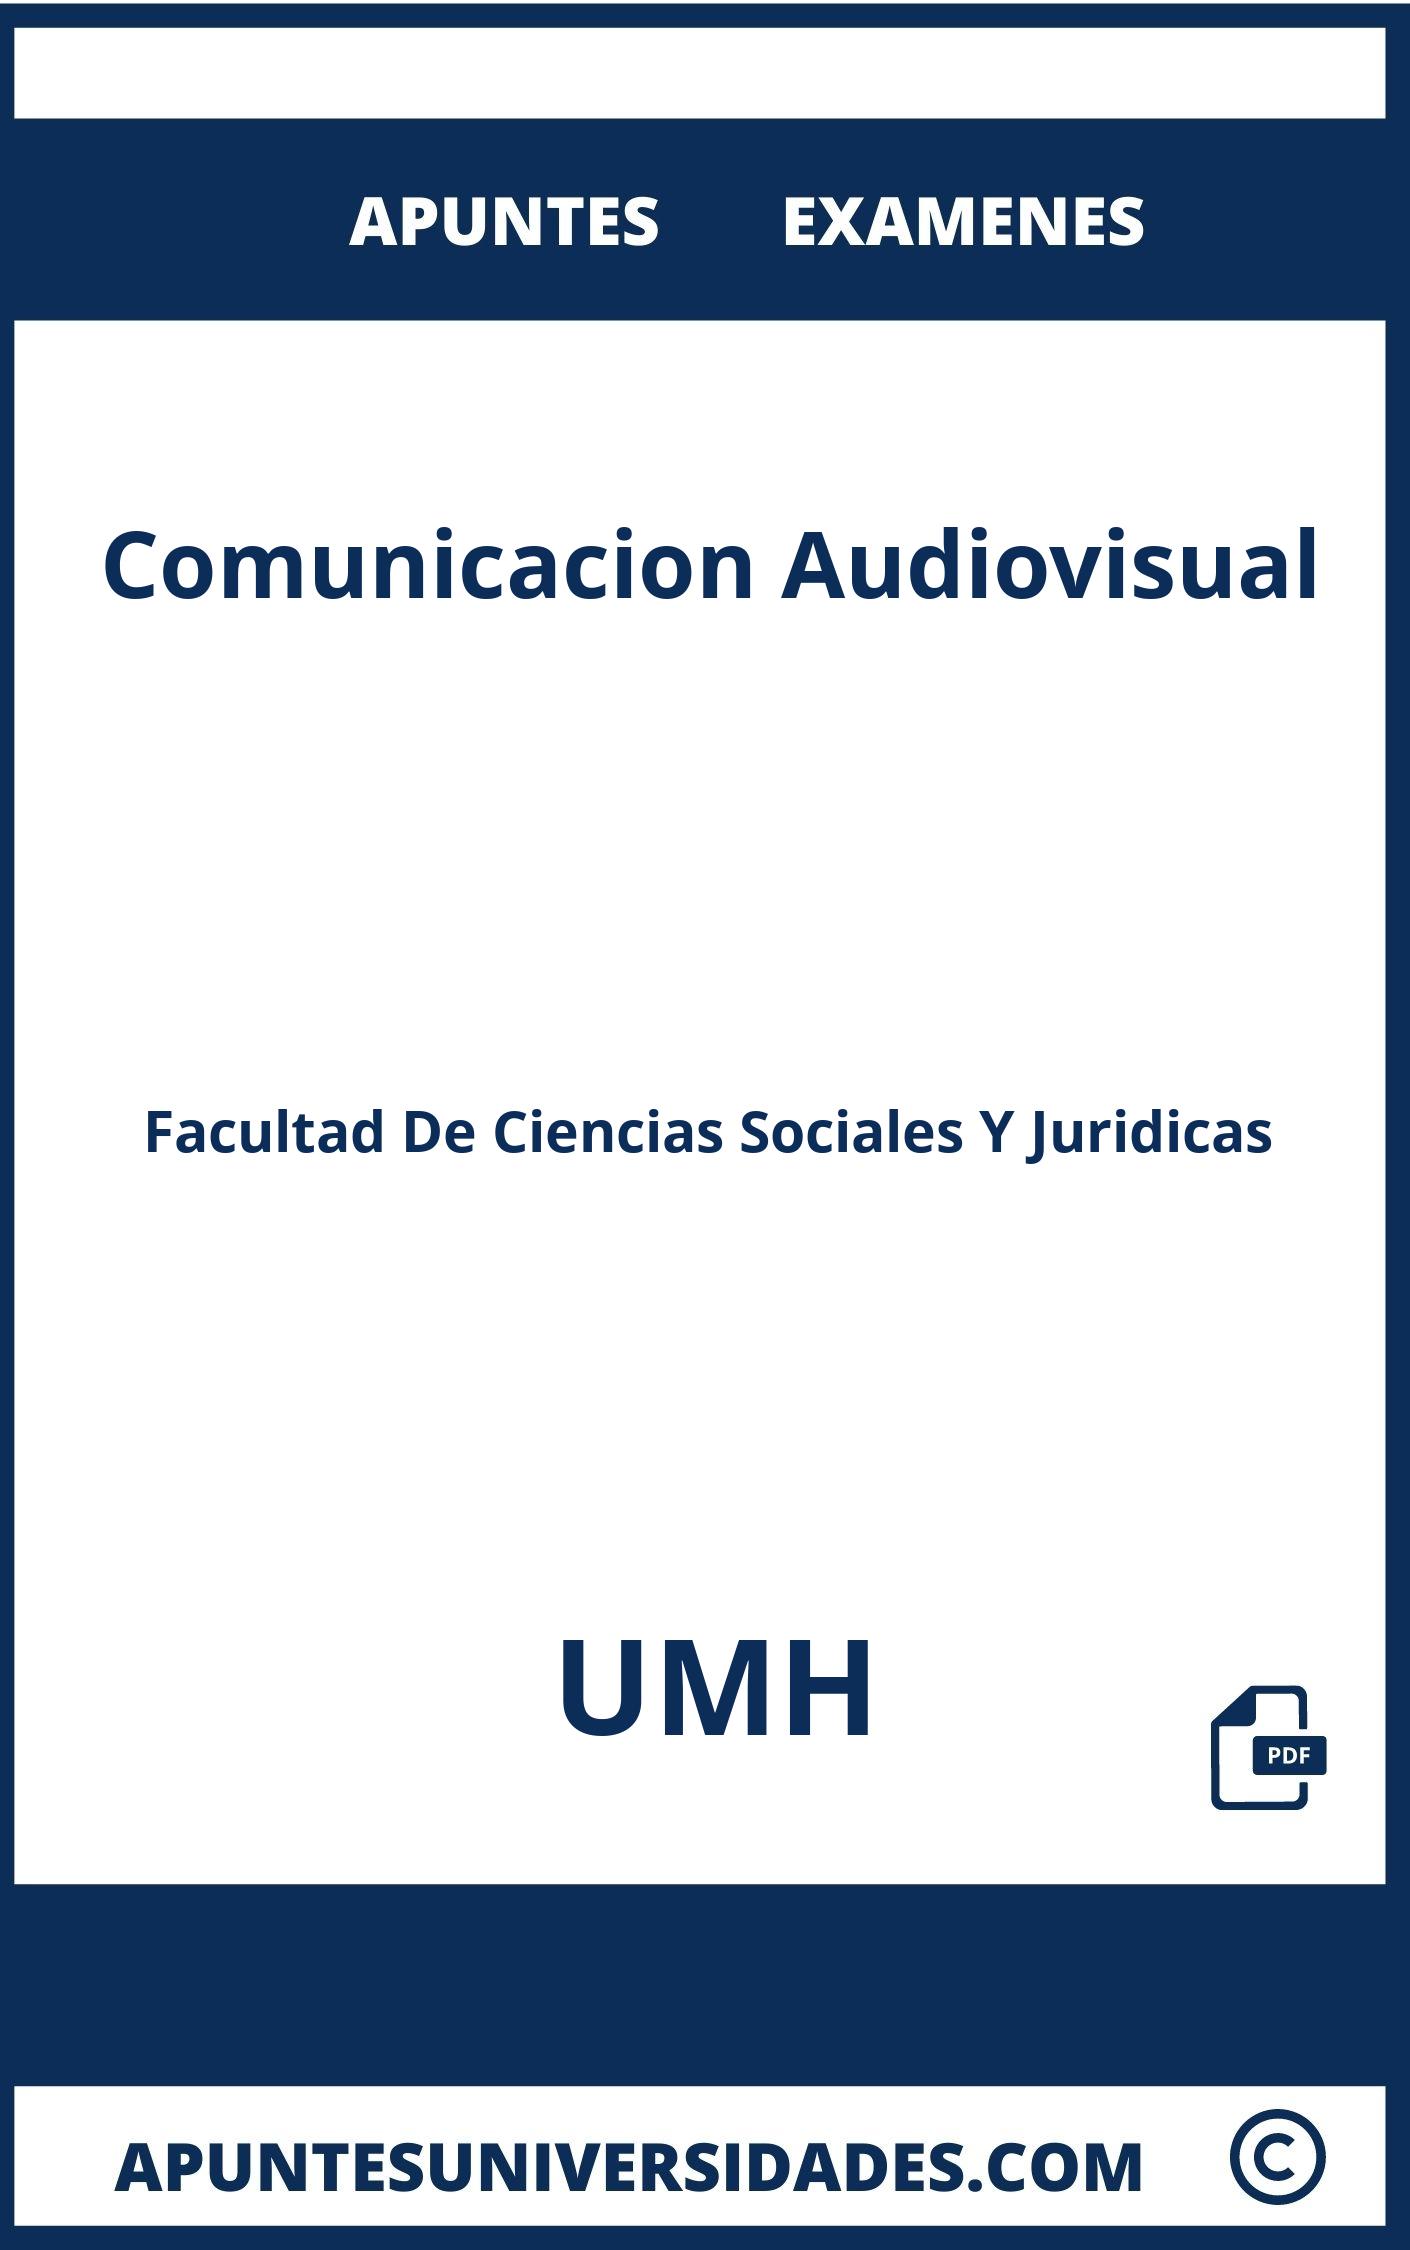 Apuntes y Examenes Comunicacion Audiovisual UMH